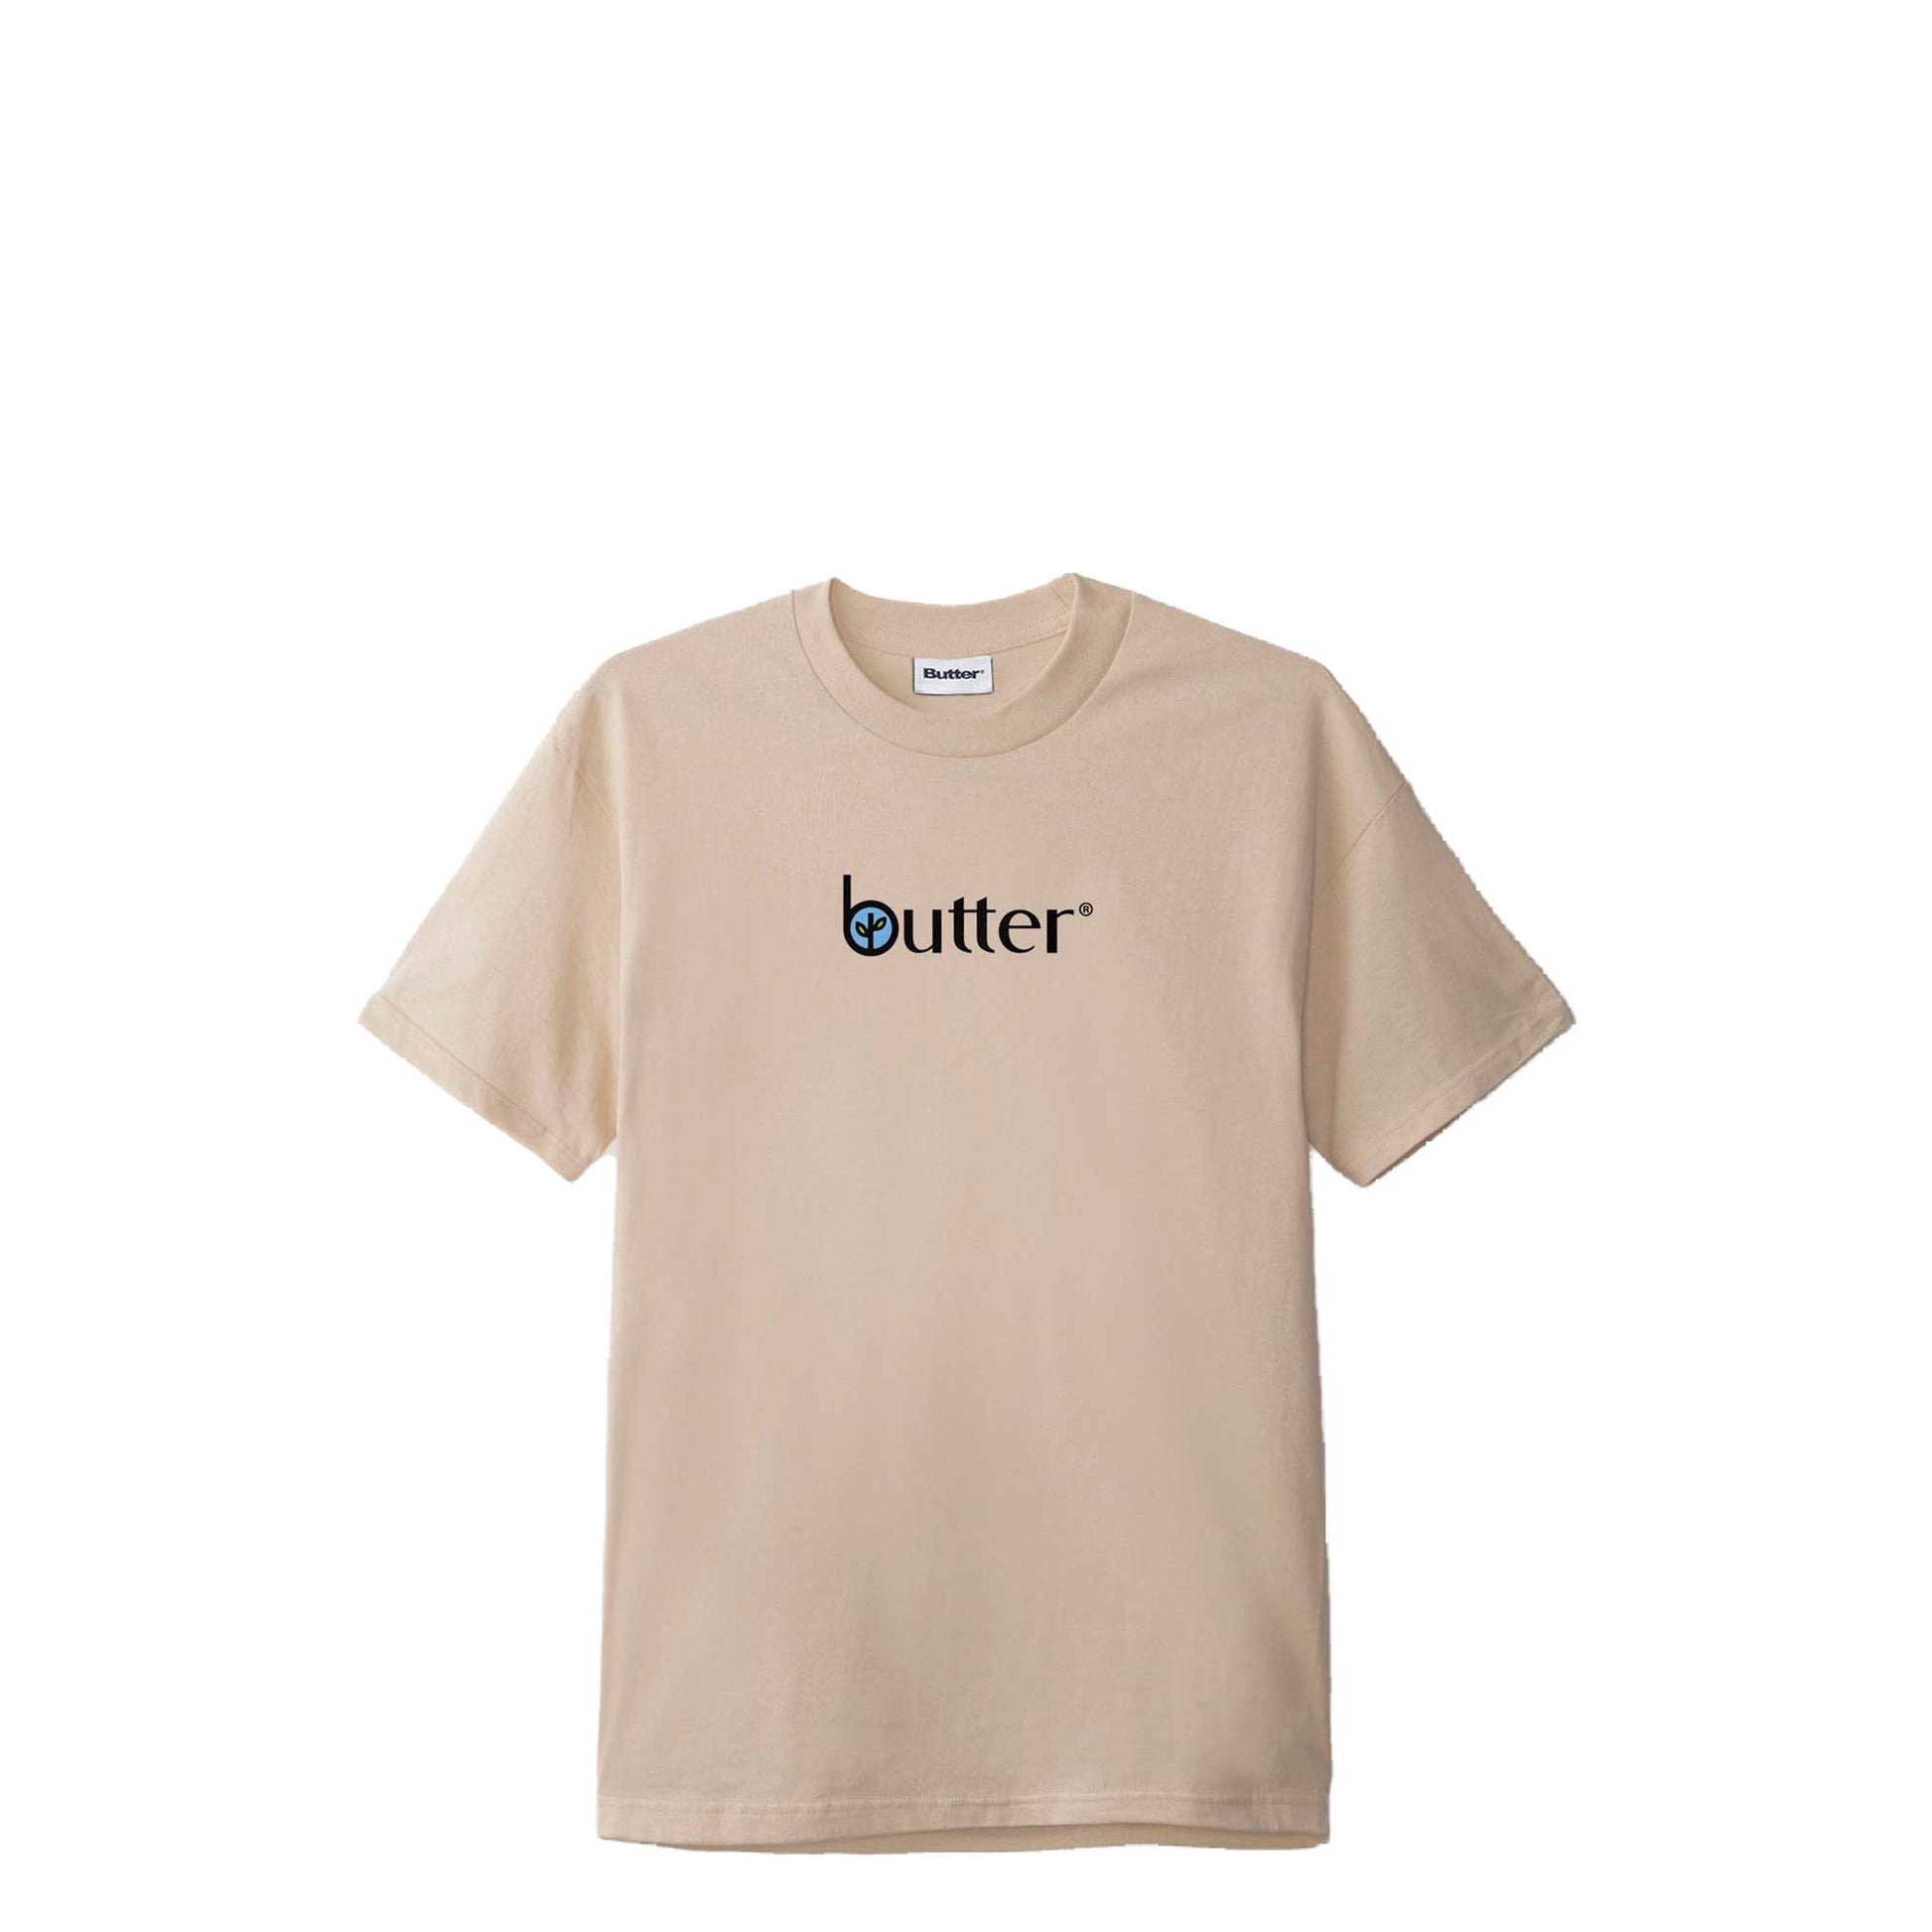 Butter Goods Leaf Classic Logo Tee, sand - Tiki Room Skateboards - 1